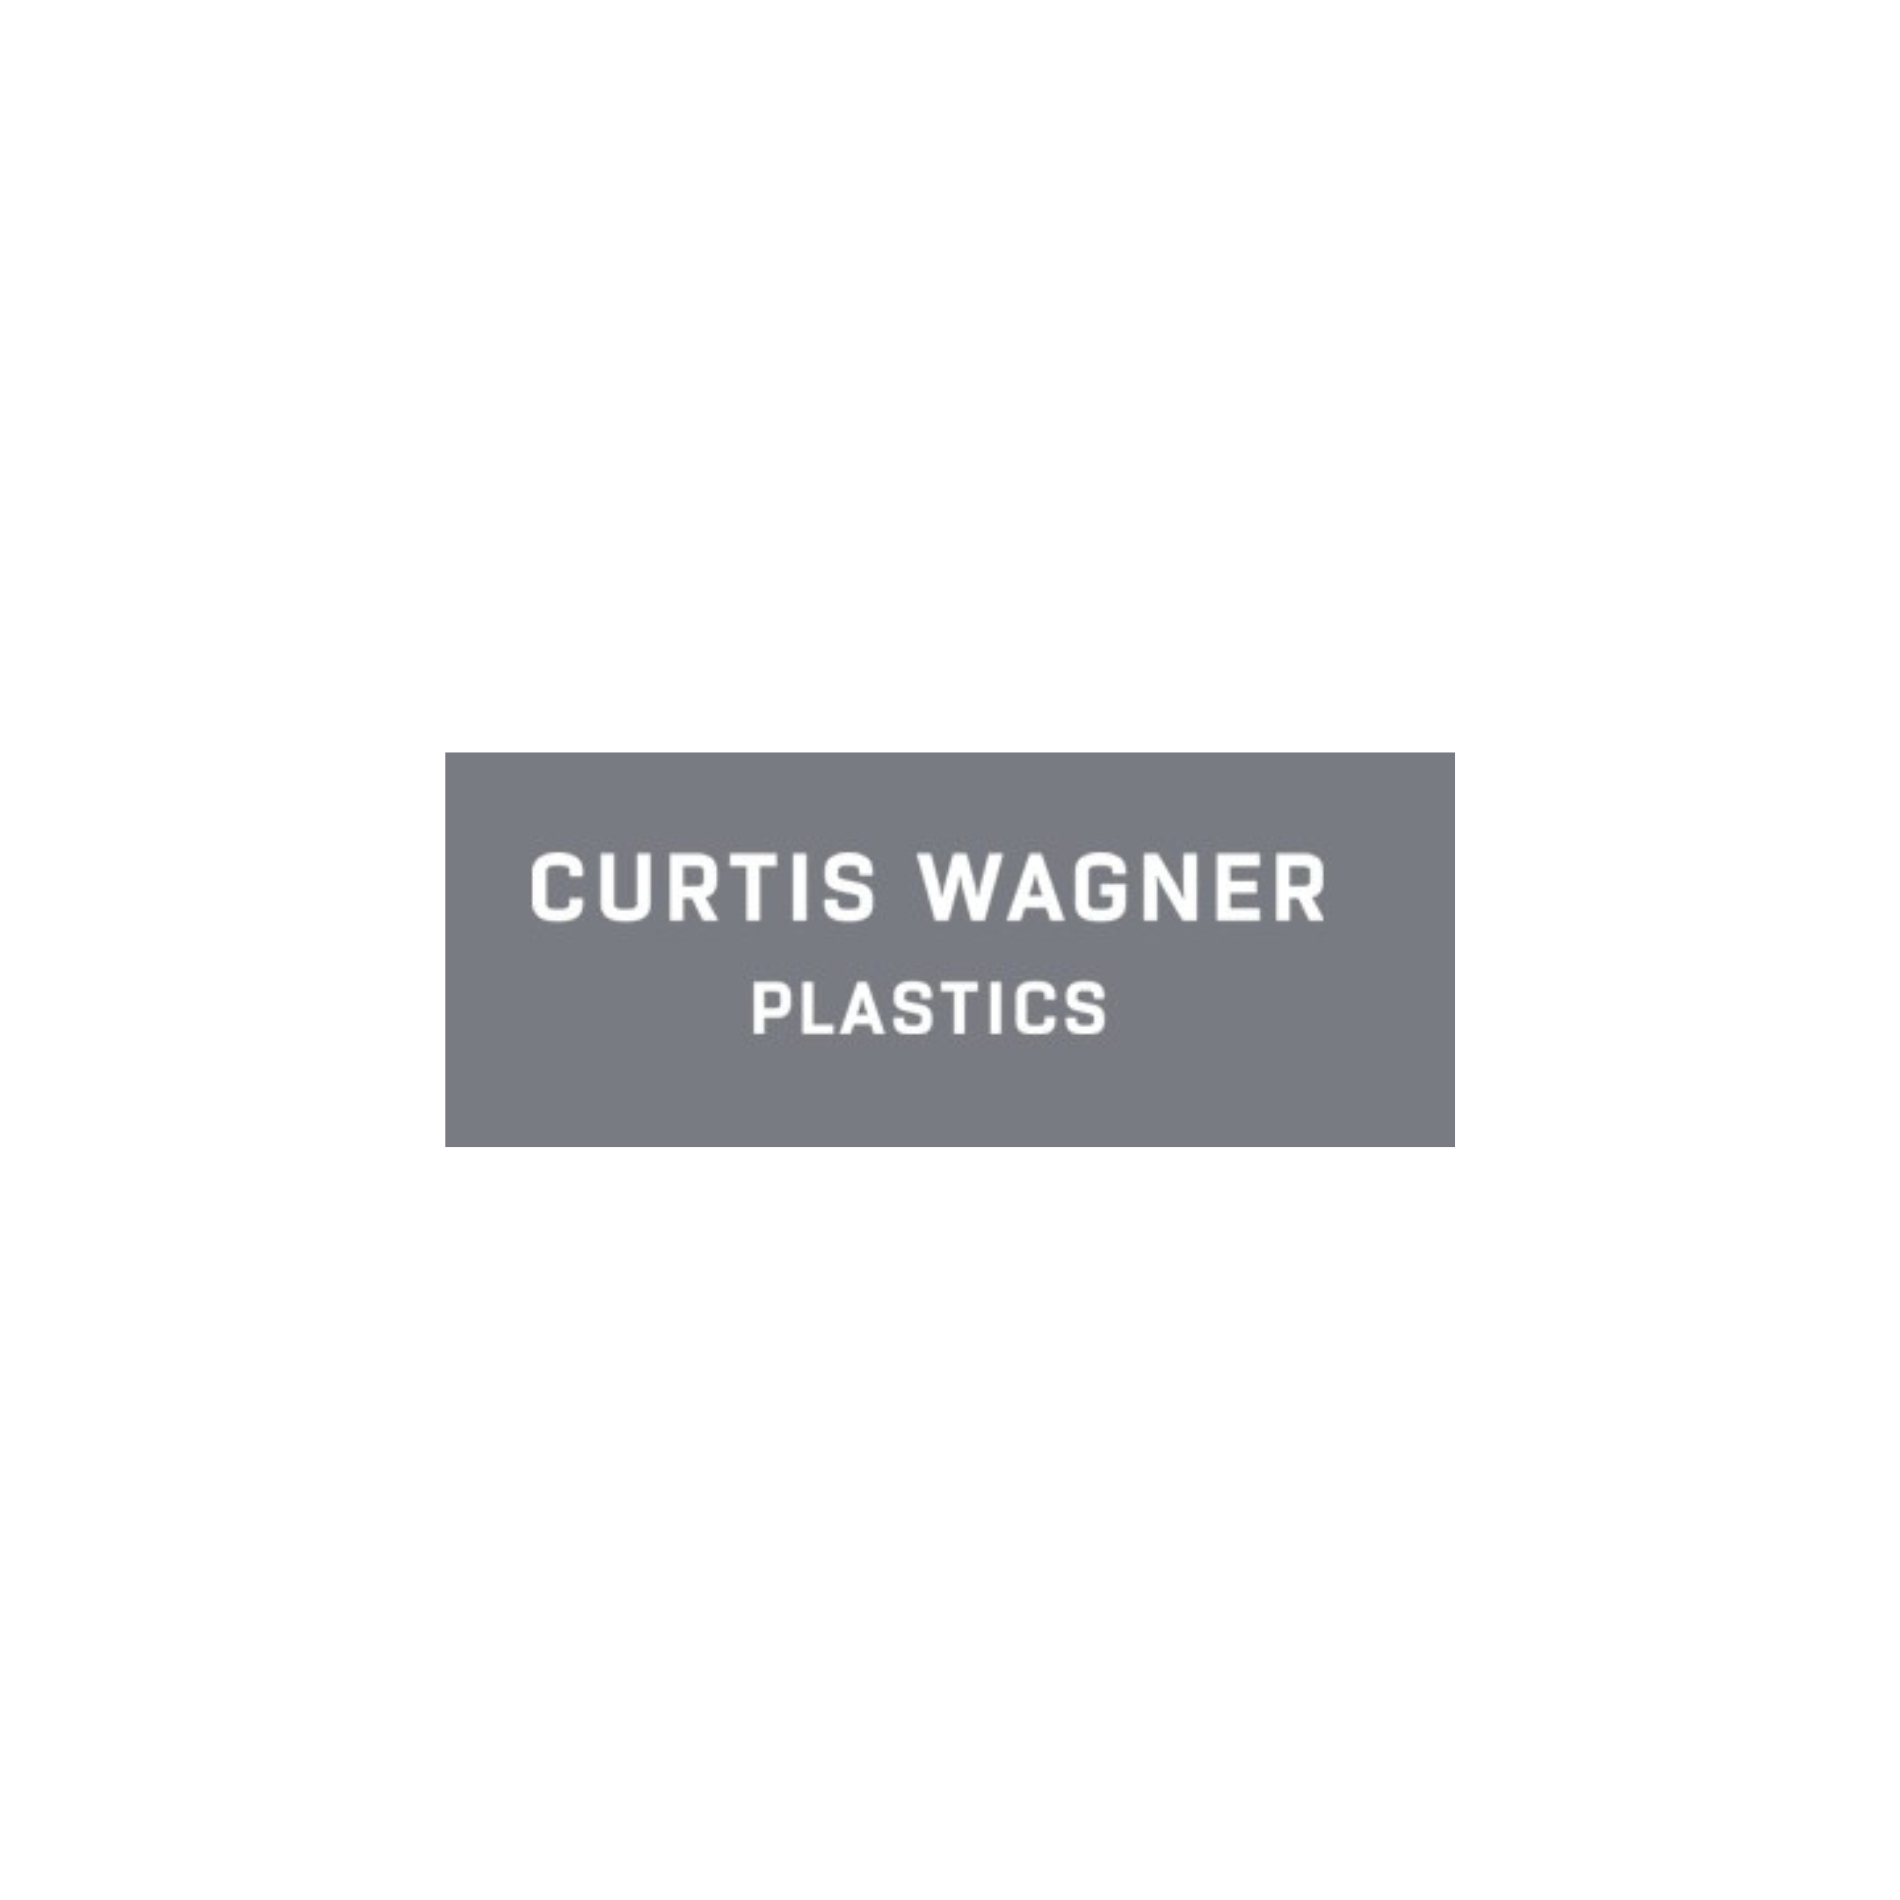 Curtis Wagner Plastics